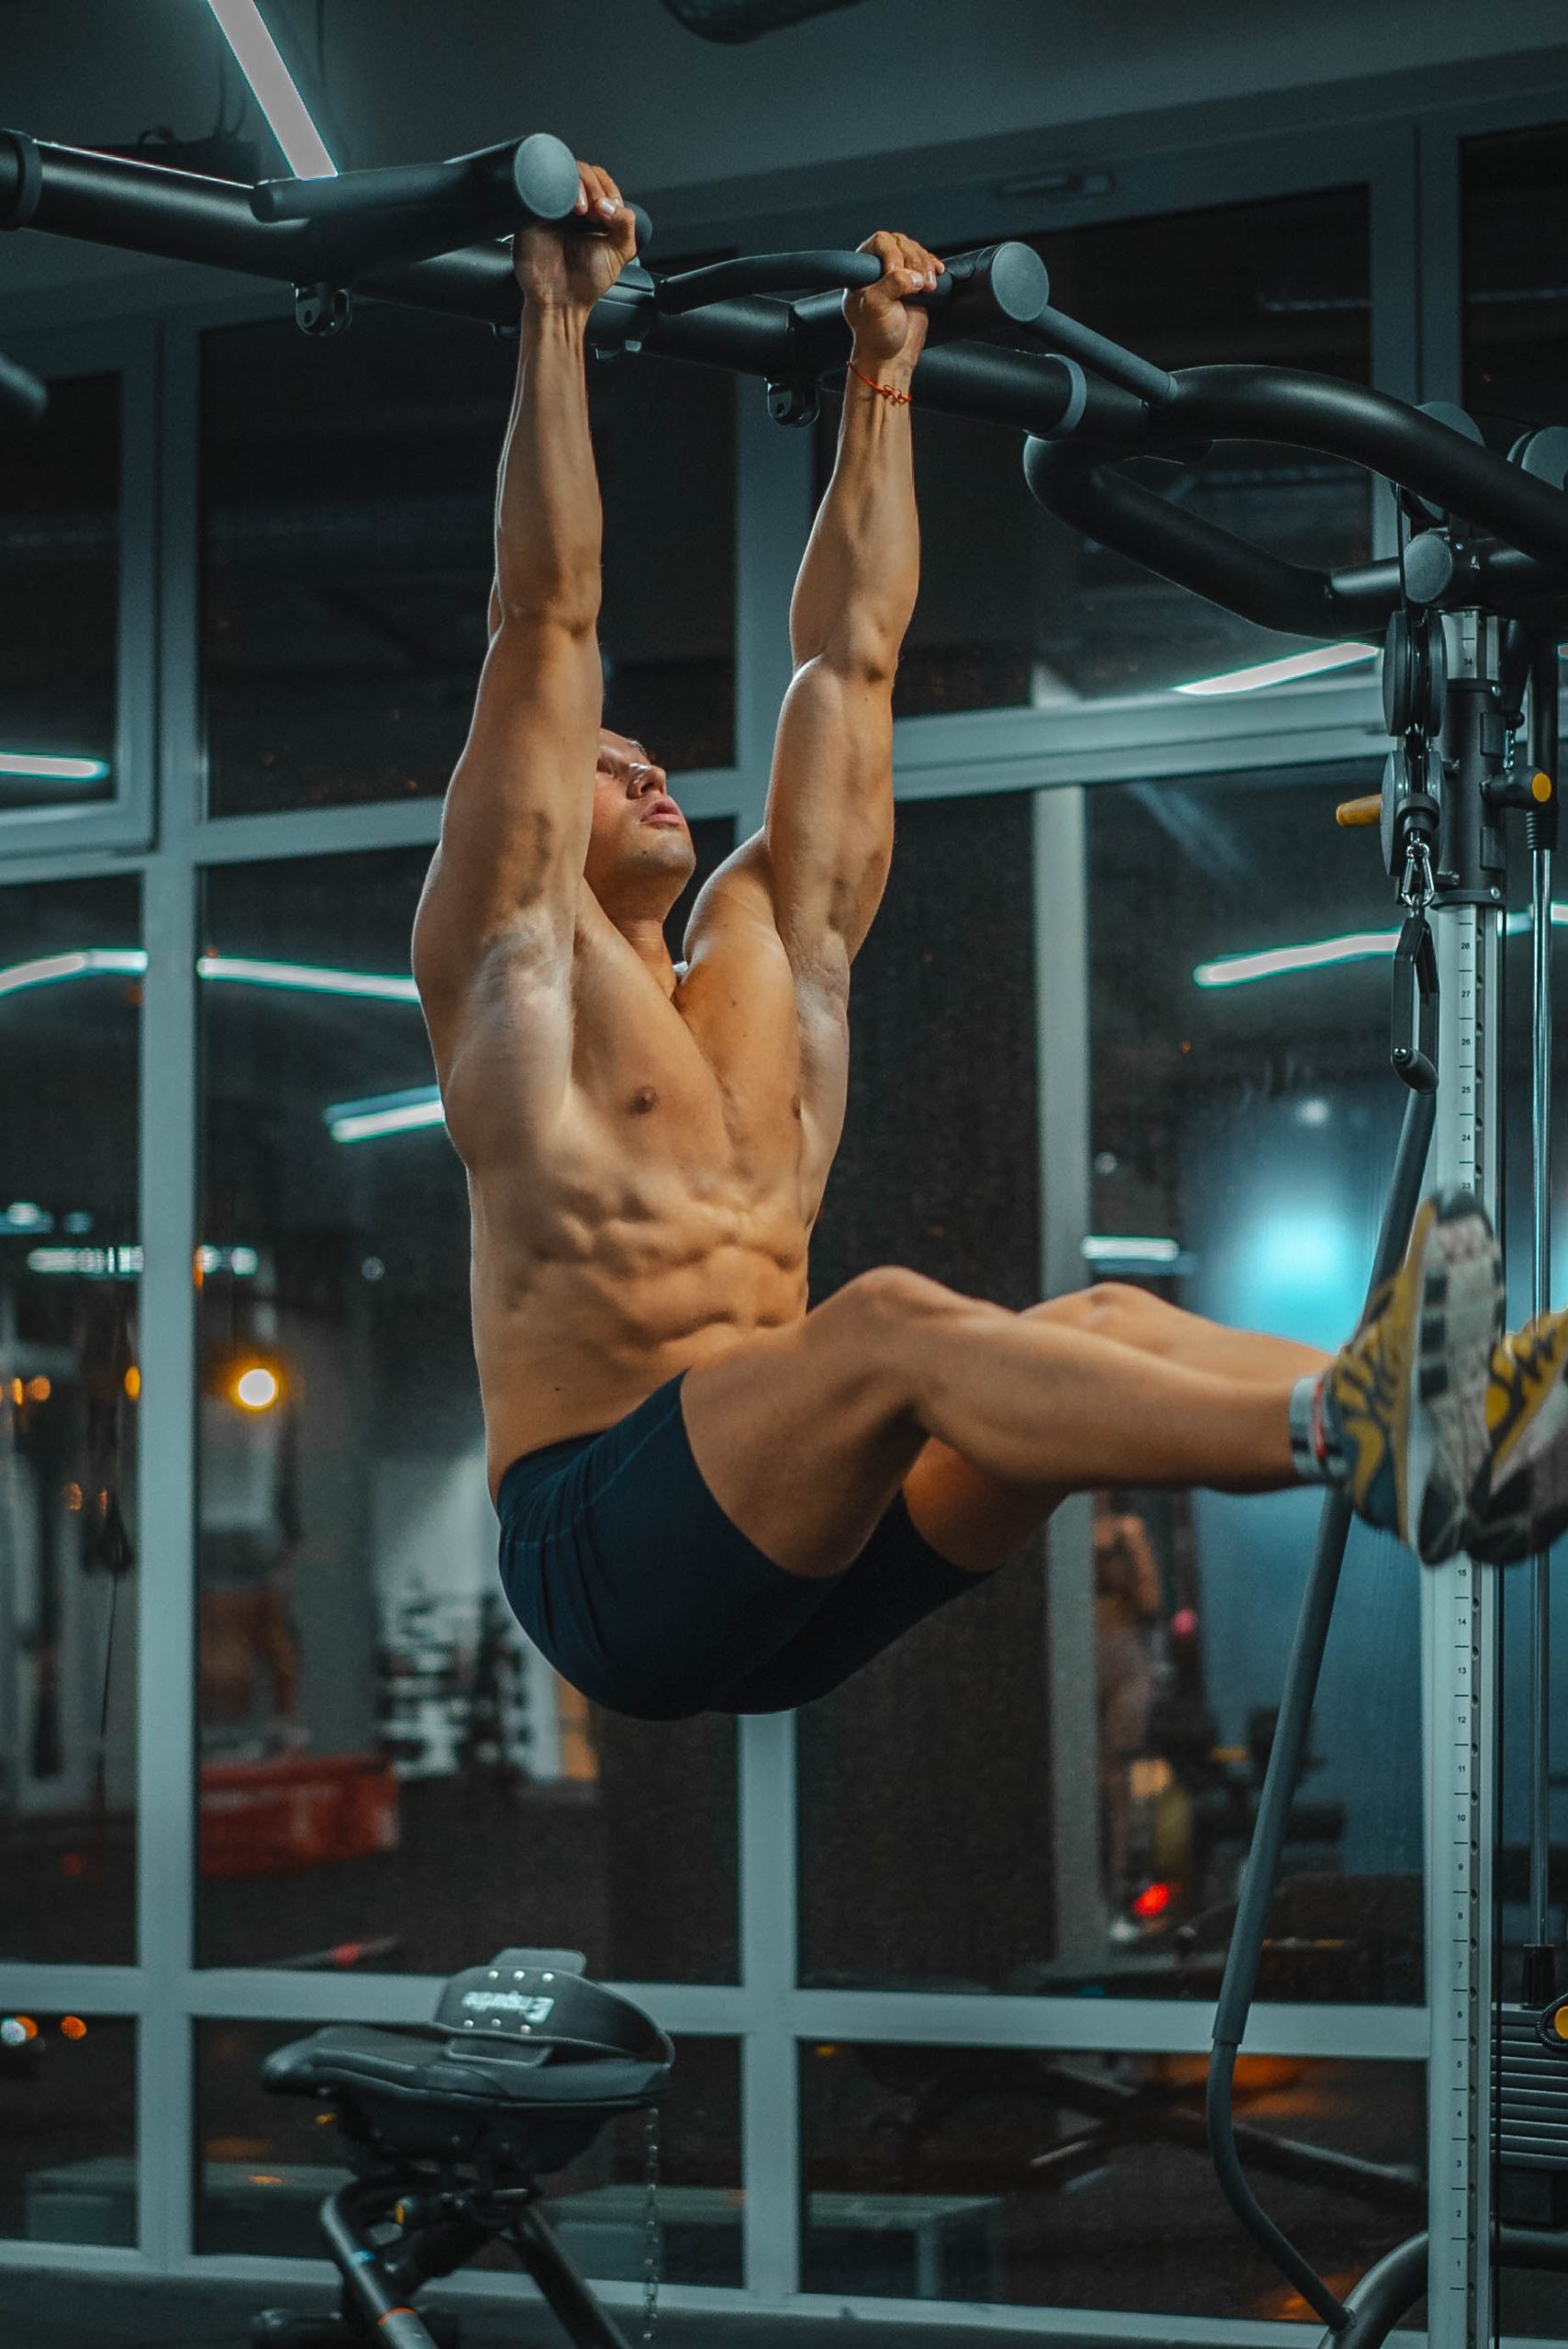 Man doing a hangling leg raise to strengthen his abs